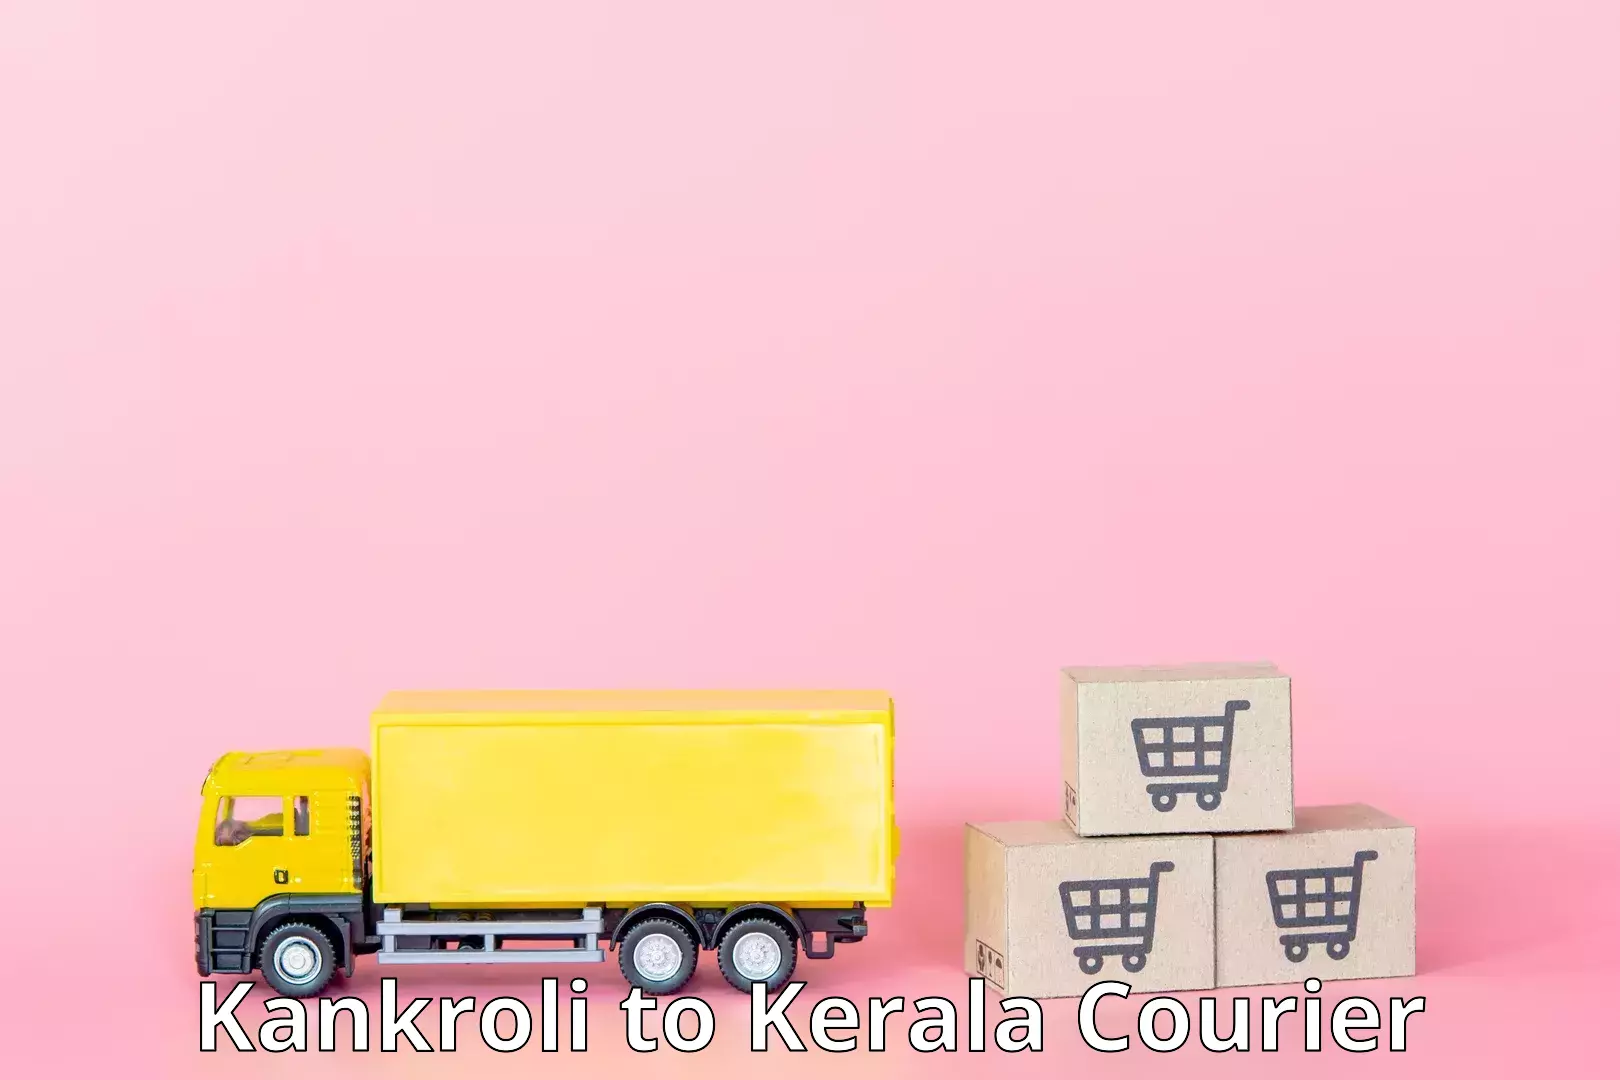 Advanced tracking systems Kankroli to Kerala